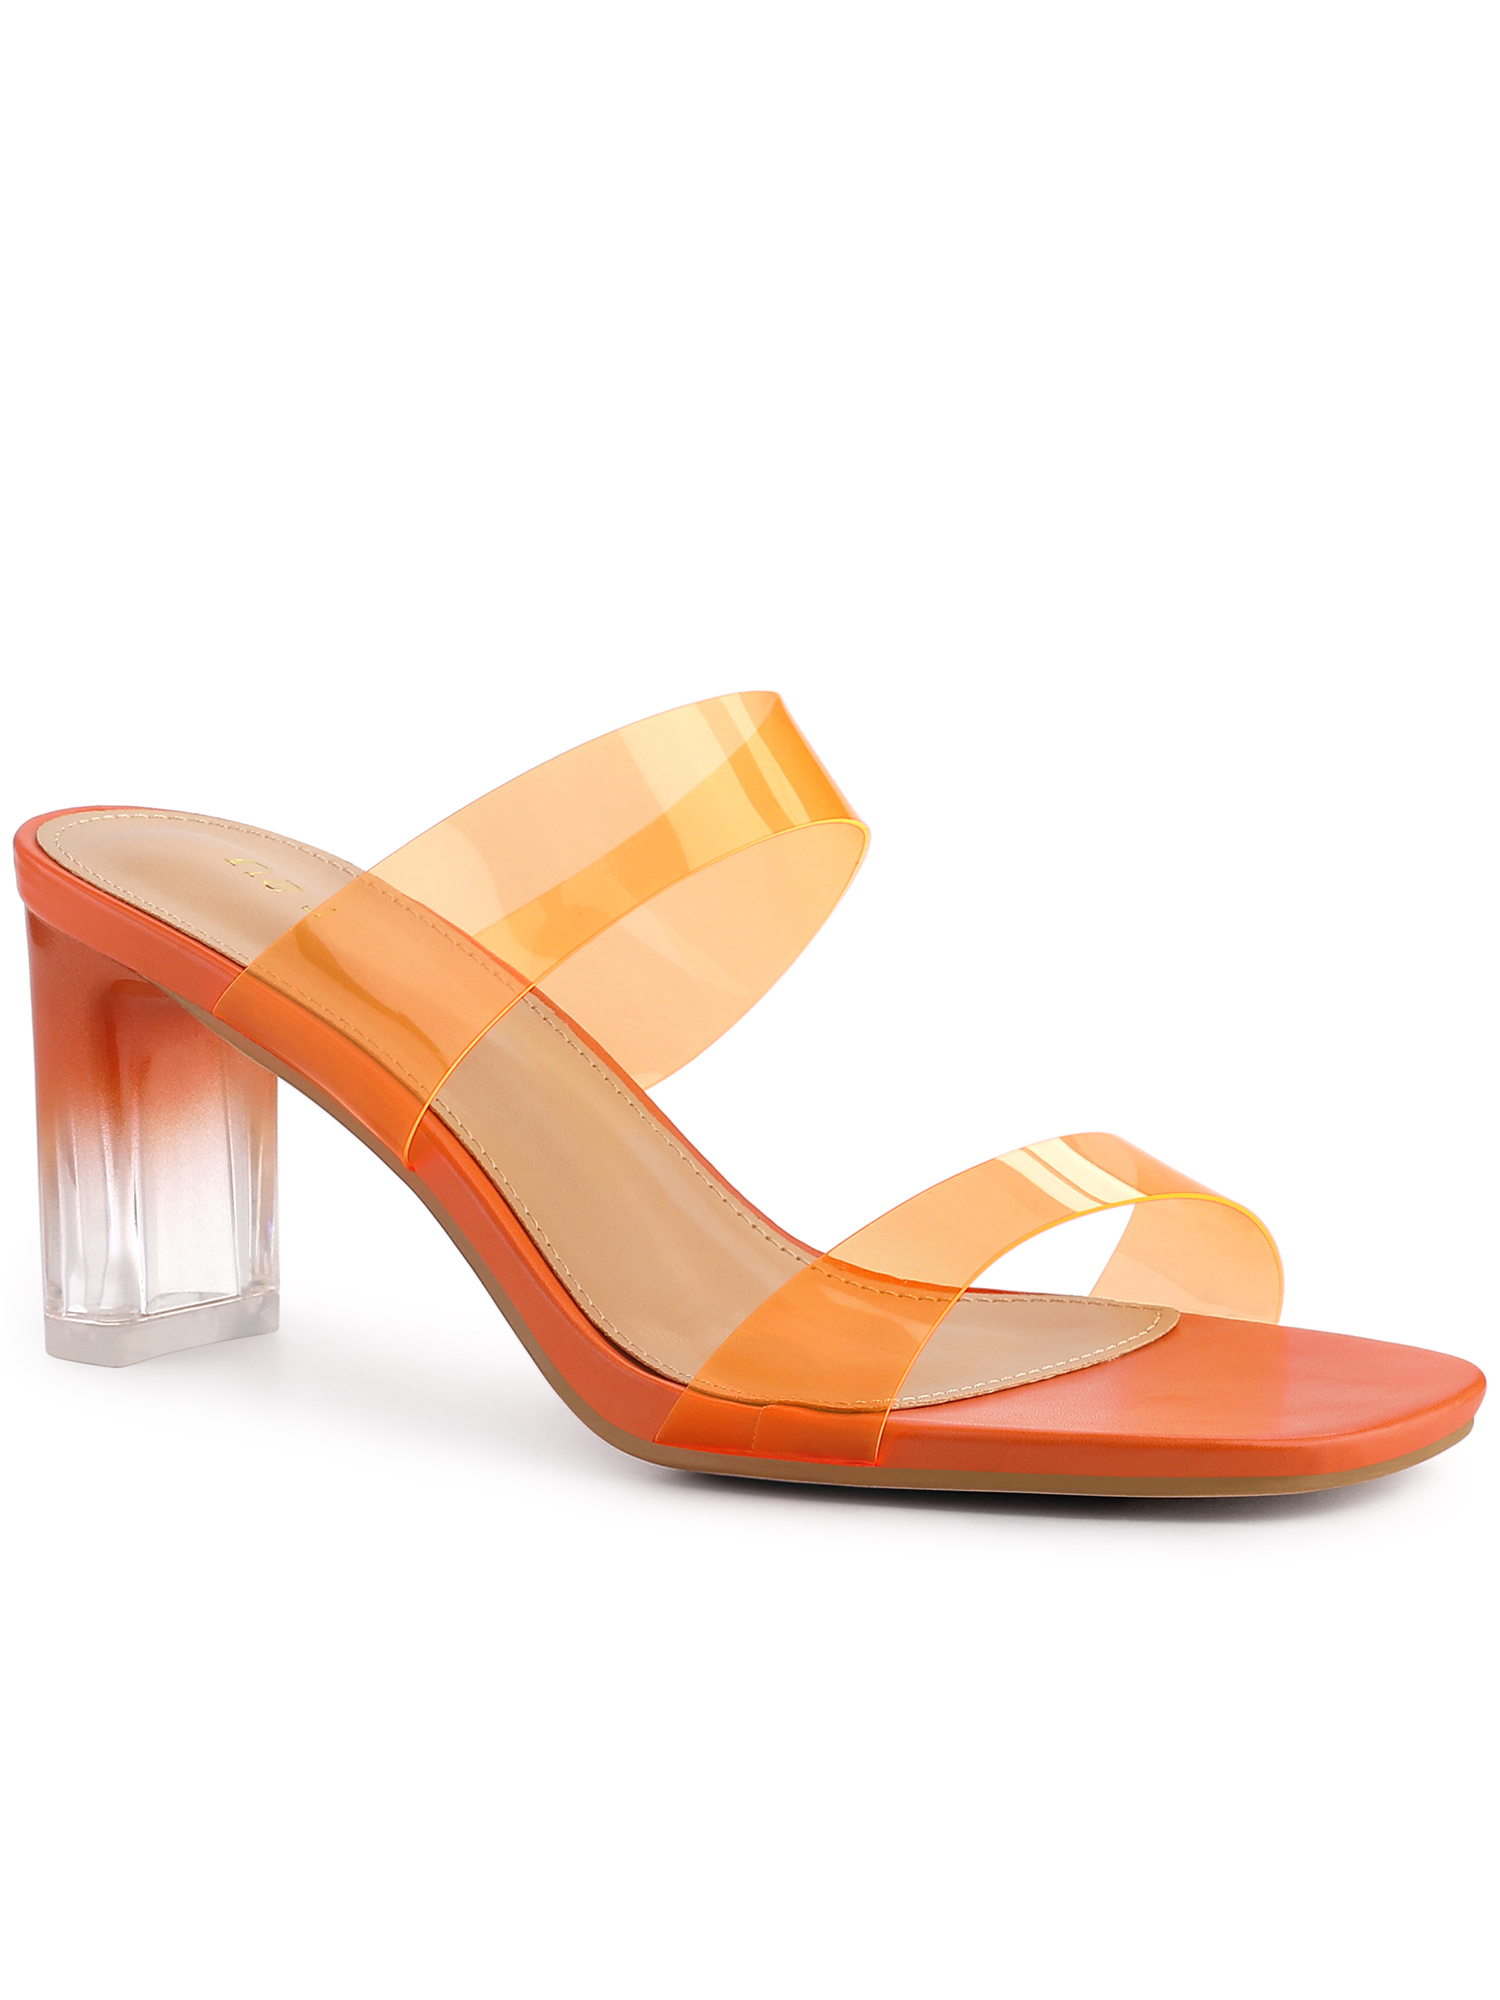 Allegra K Women's Sandals Block Heels Clear Colorful Straps Slides ...